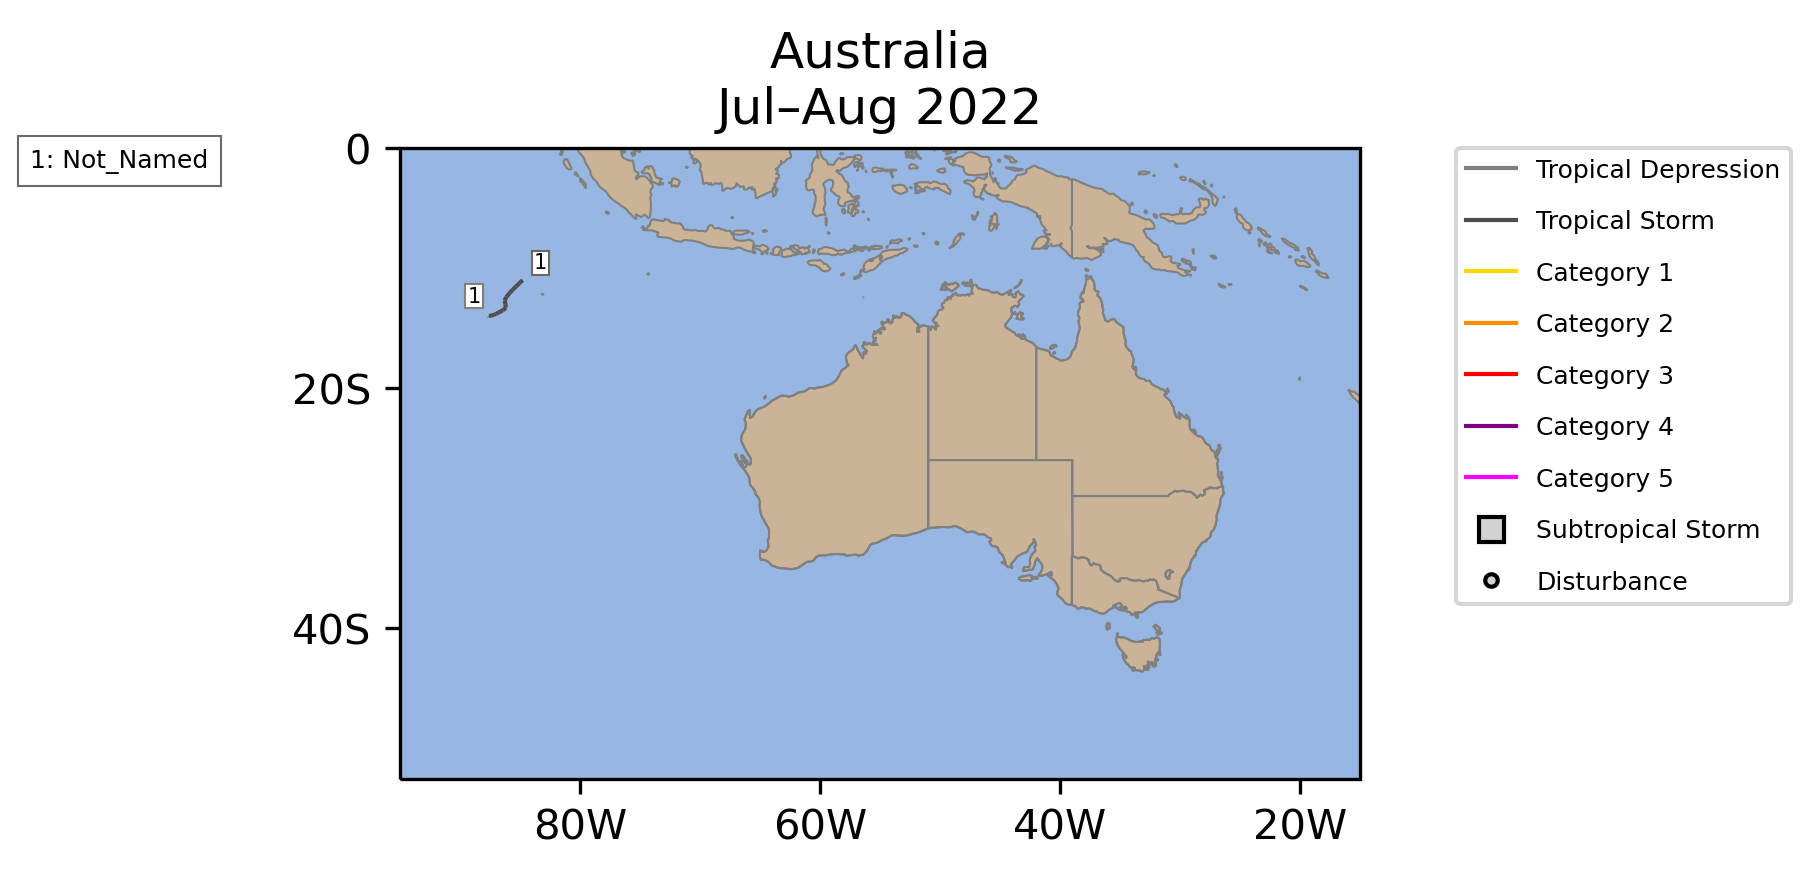 Australia Tropical Cyclone Storm Tracks July-August 2022